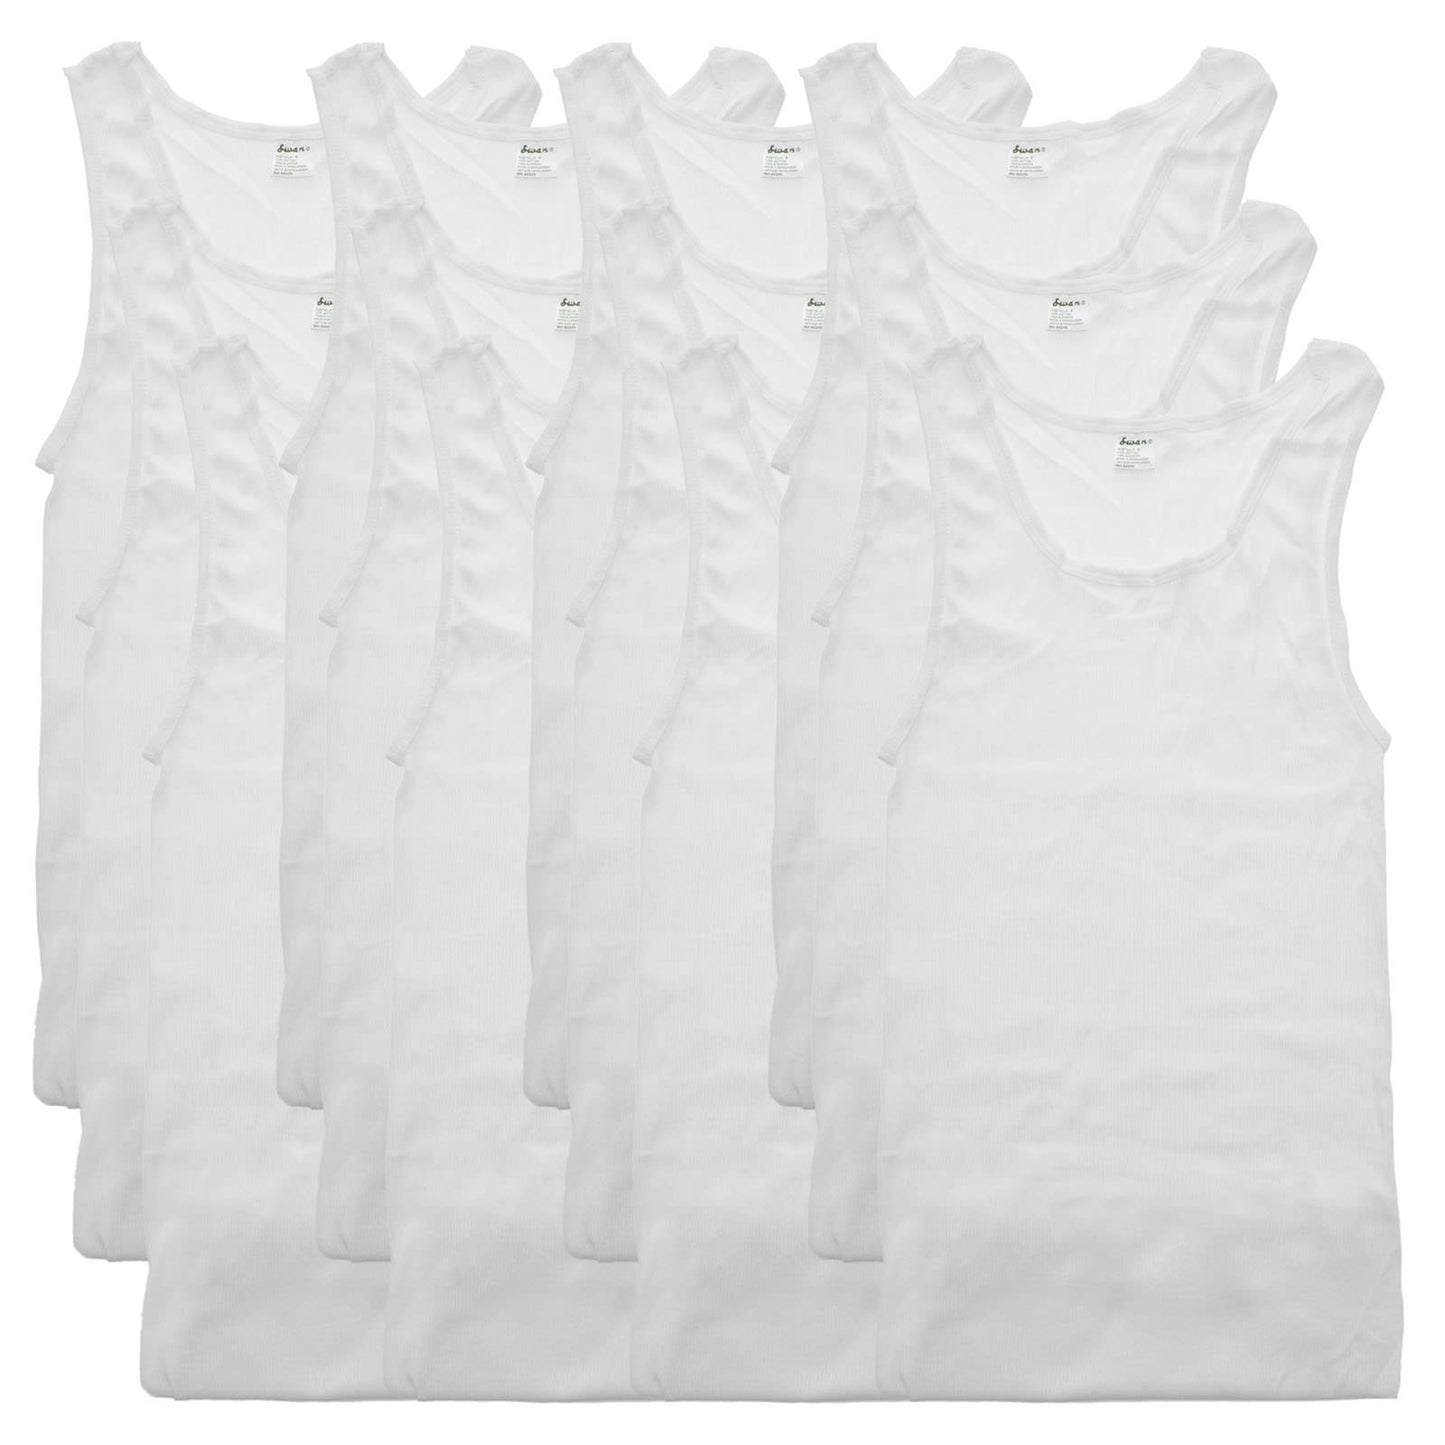 Swan White Ribbed Basic A-Shirts Tank Top (12-Pack), #5201